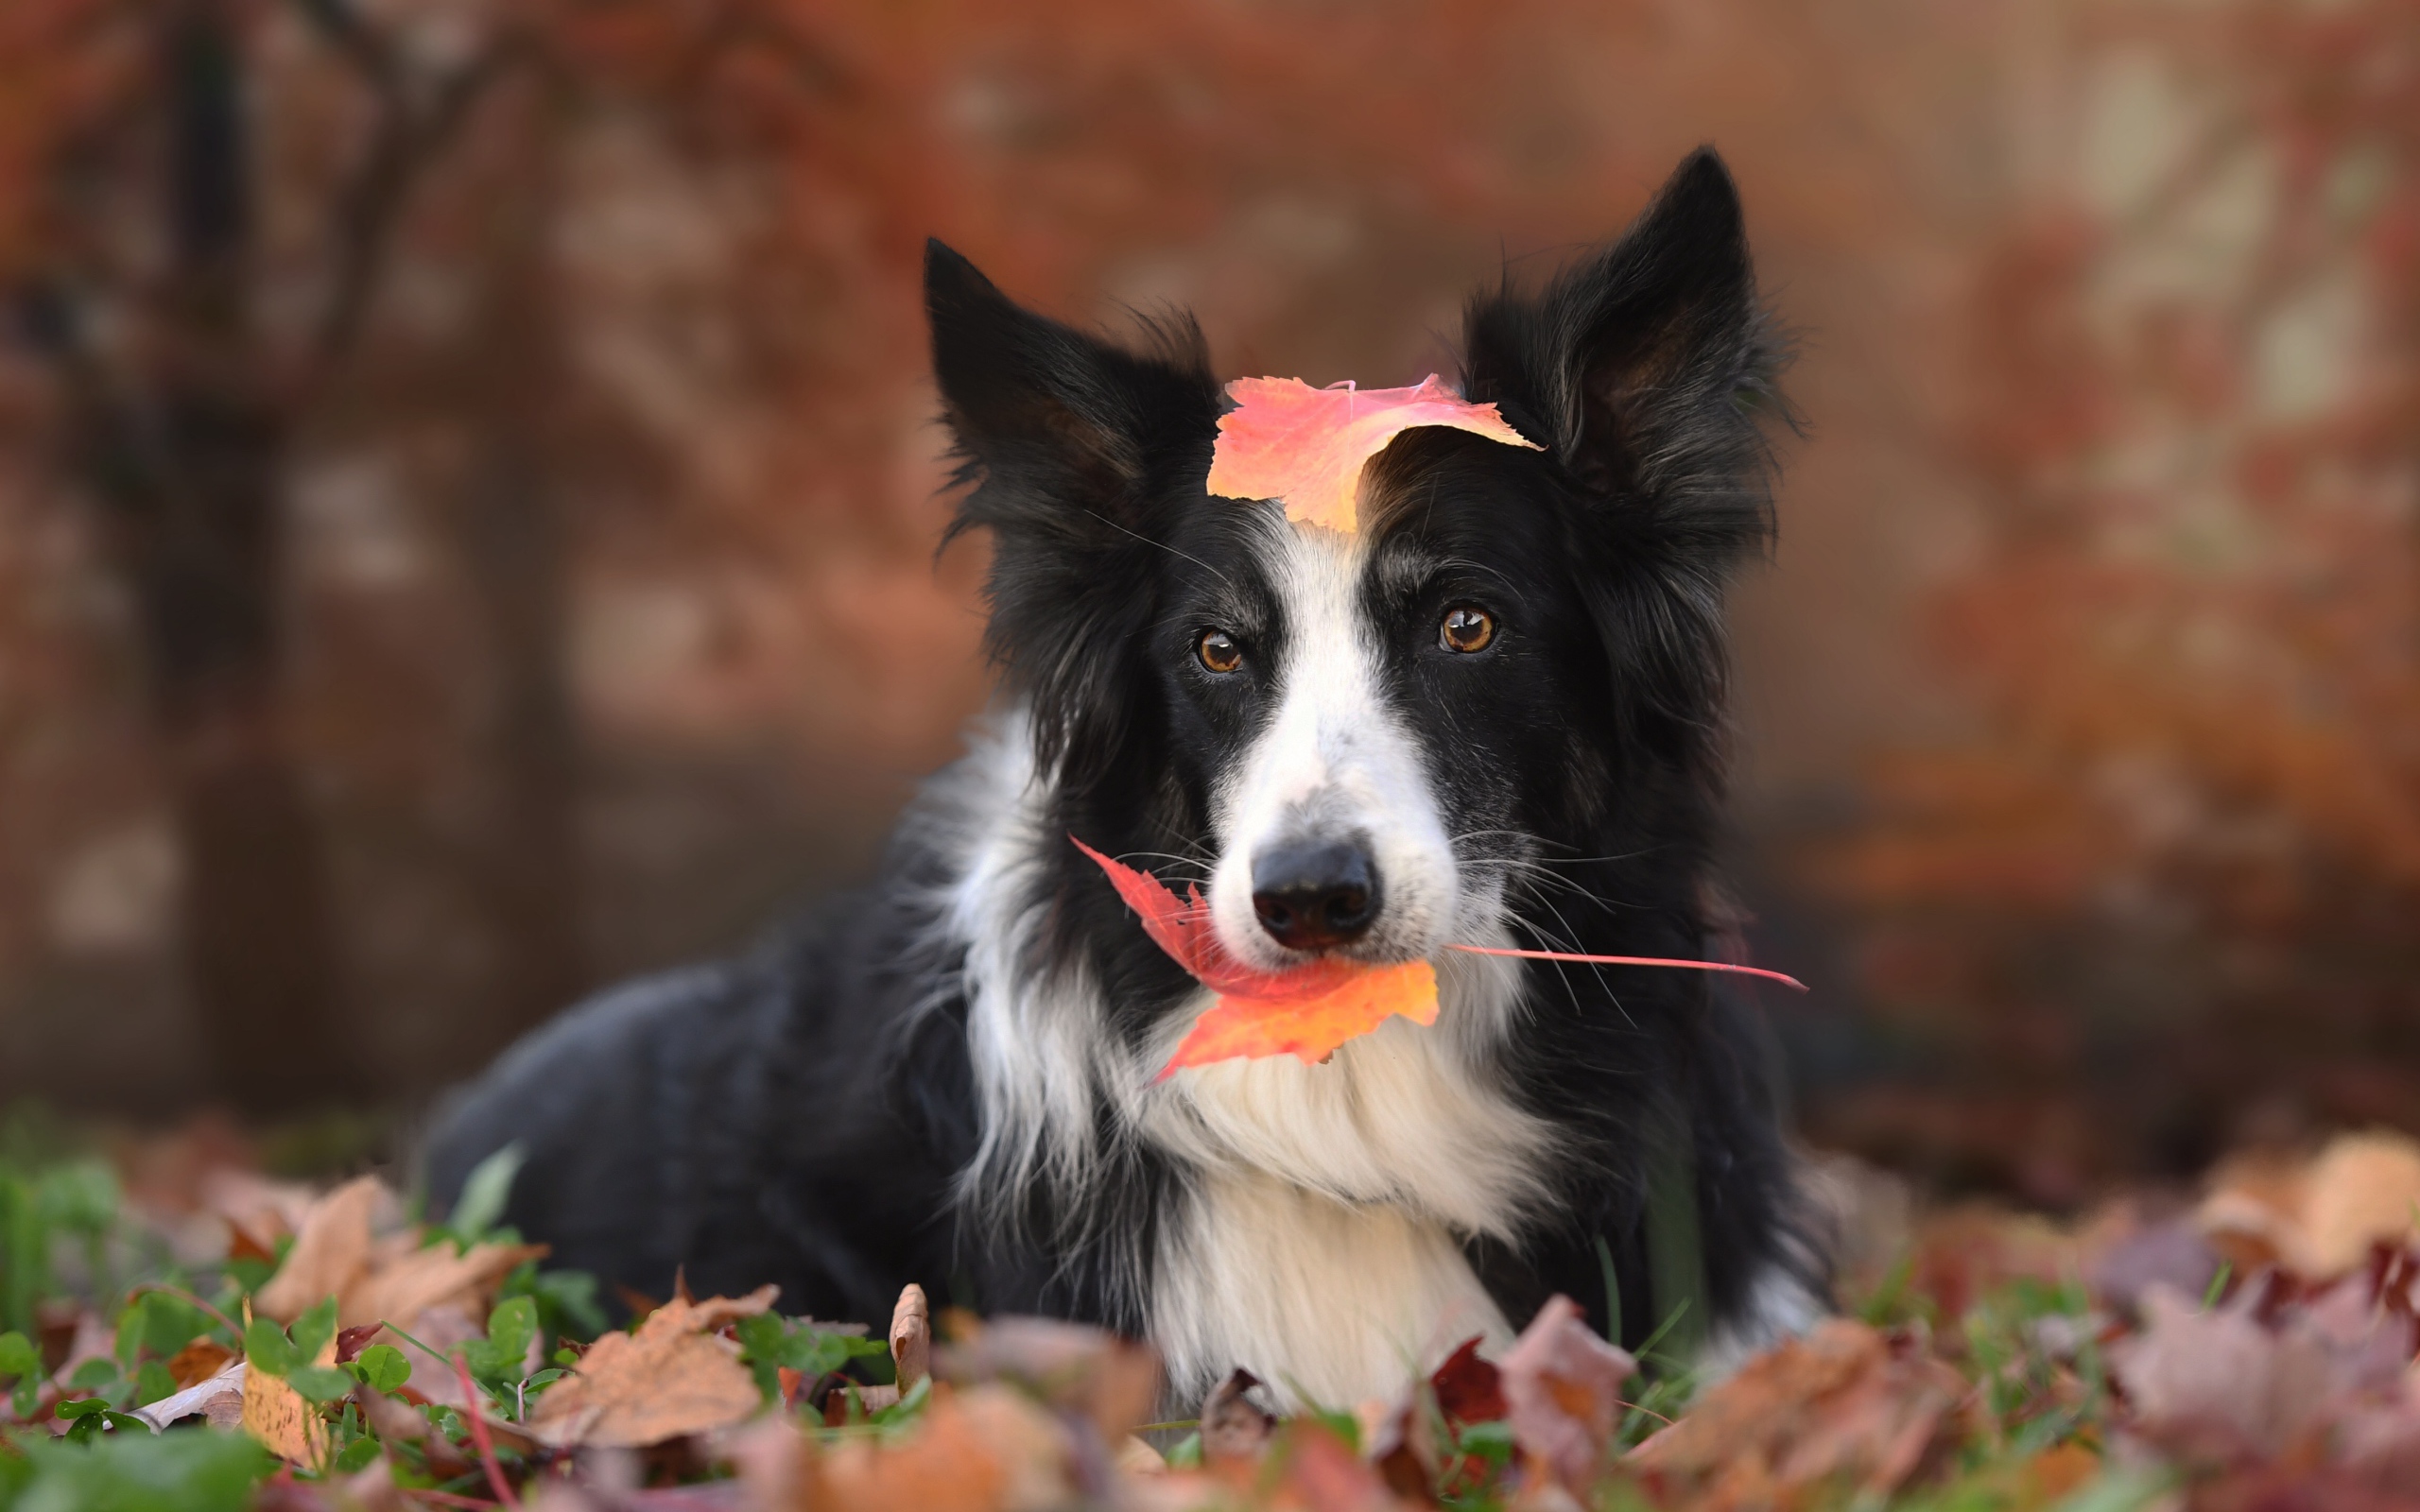 Собака породы бордер колли с желтым листом во рту